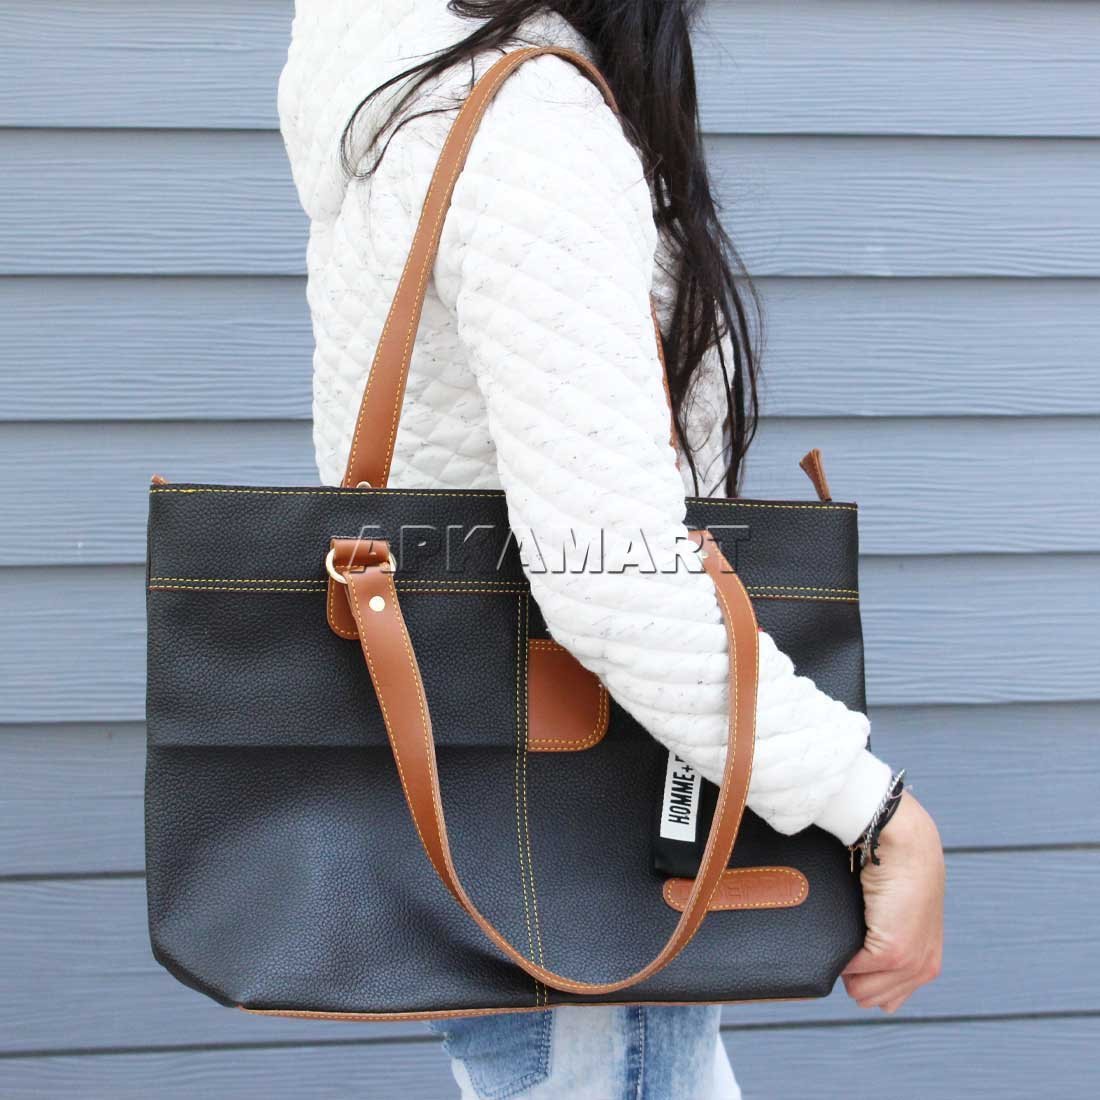 Big Handbags for Women - 12 Inch - ApkaMart